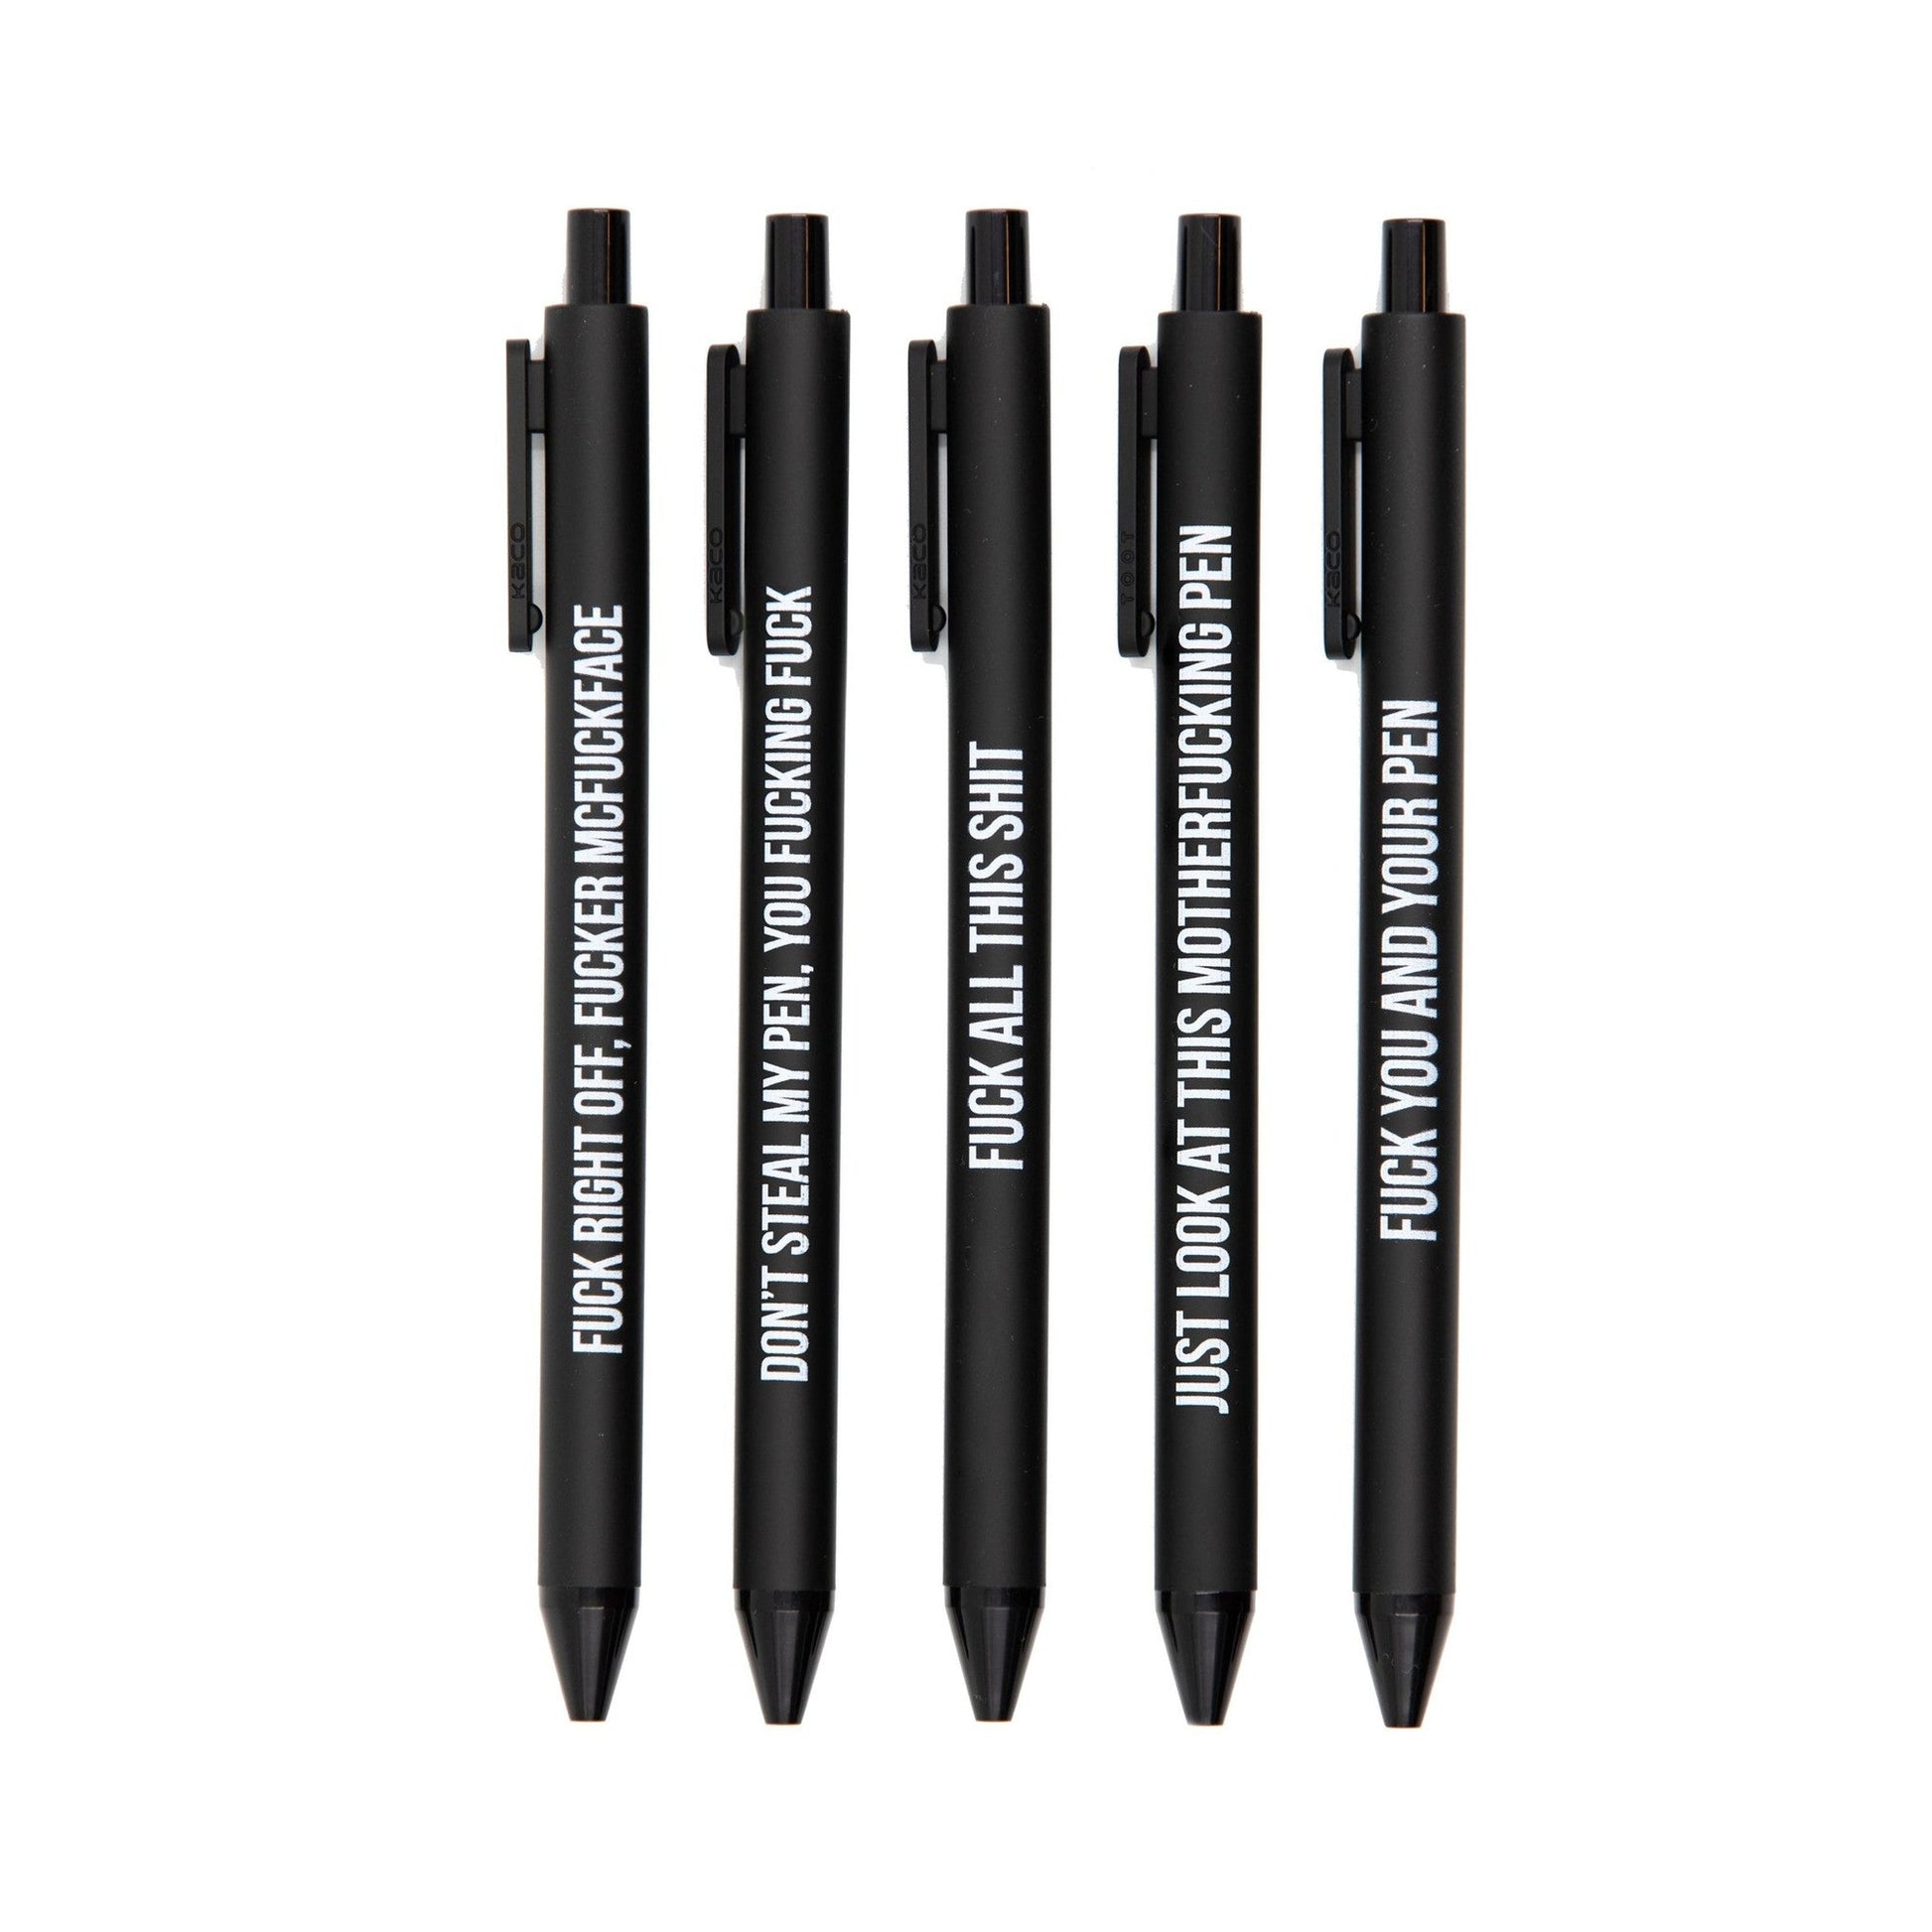  GetBullish Set Of 5 Sweary Fck Cussing Gel Pens, Black